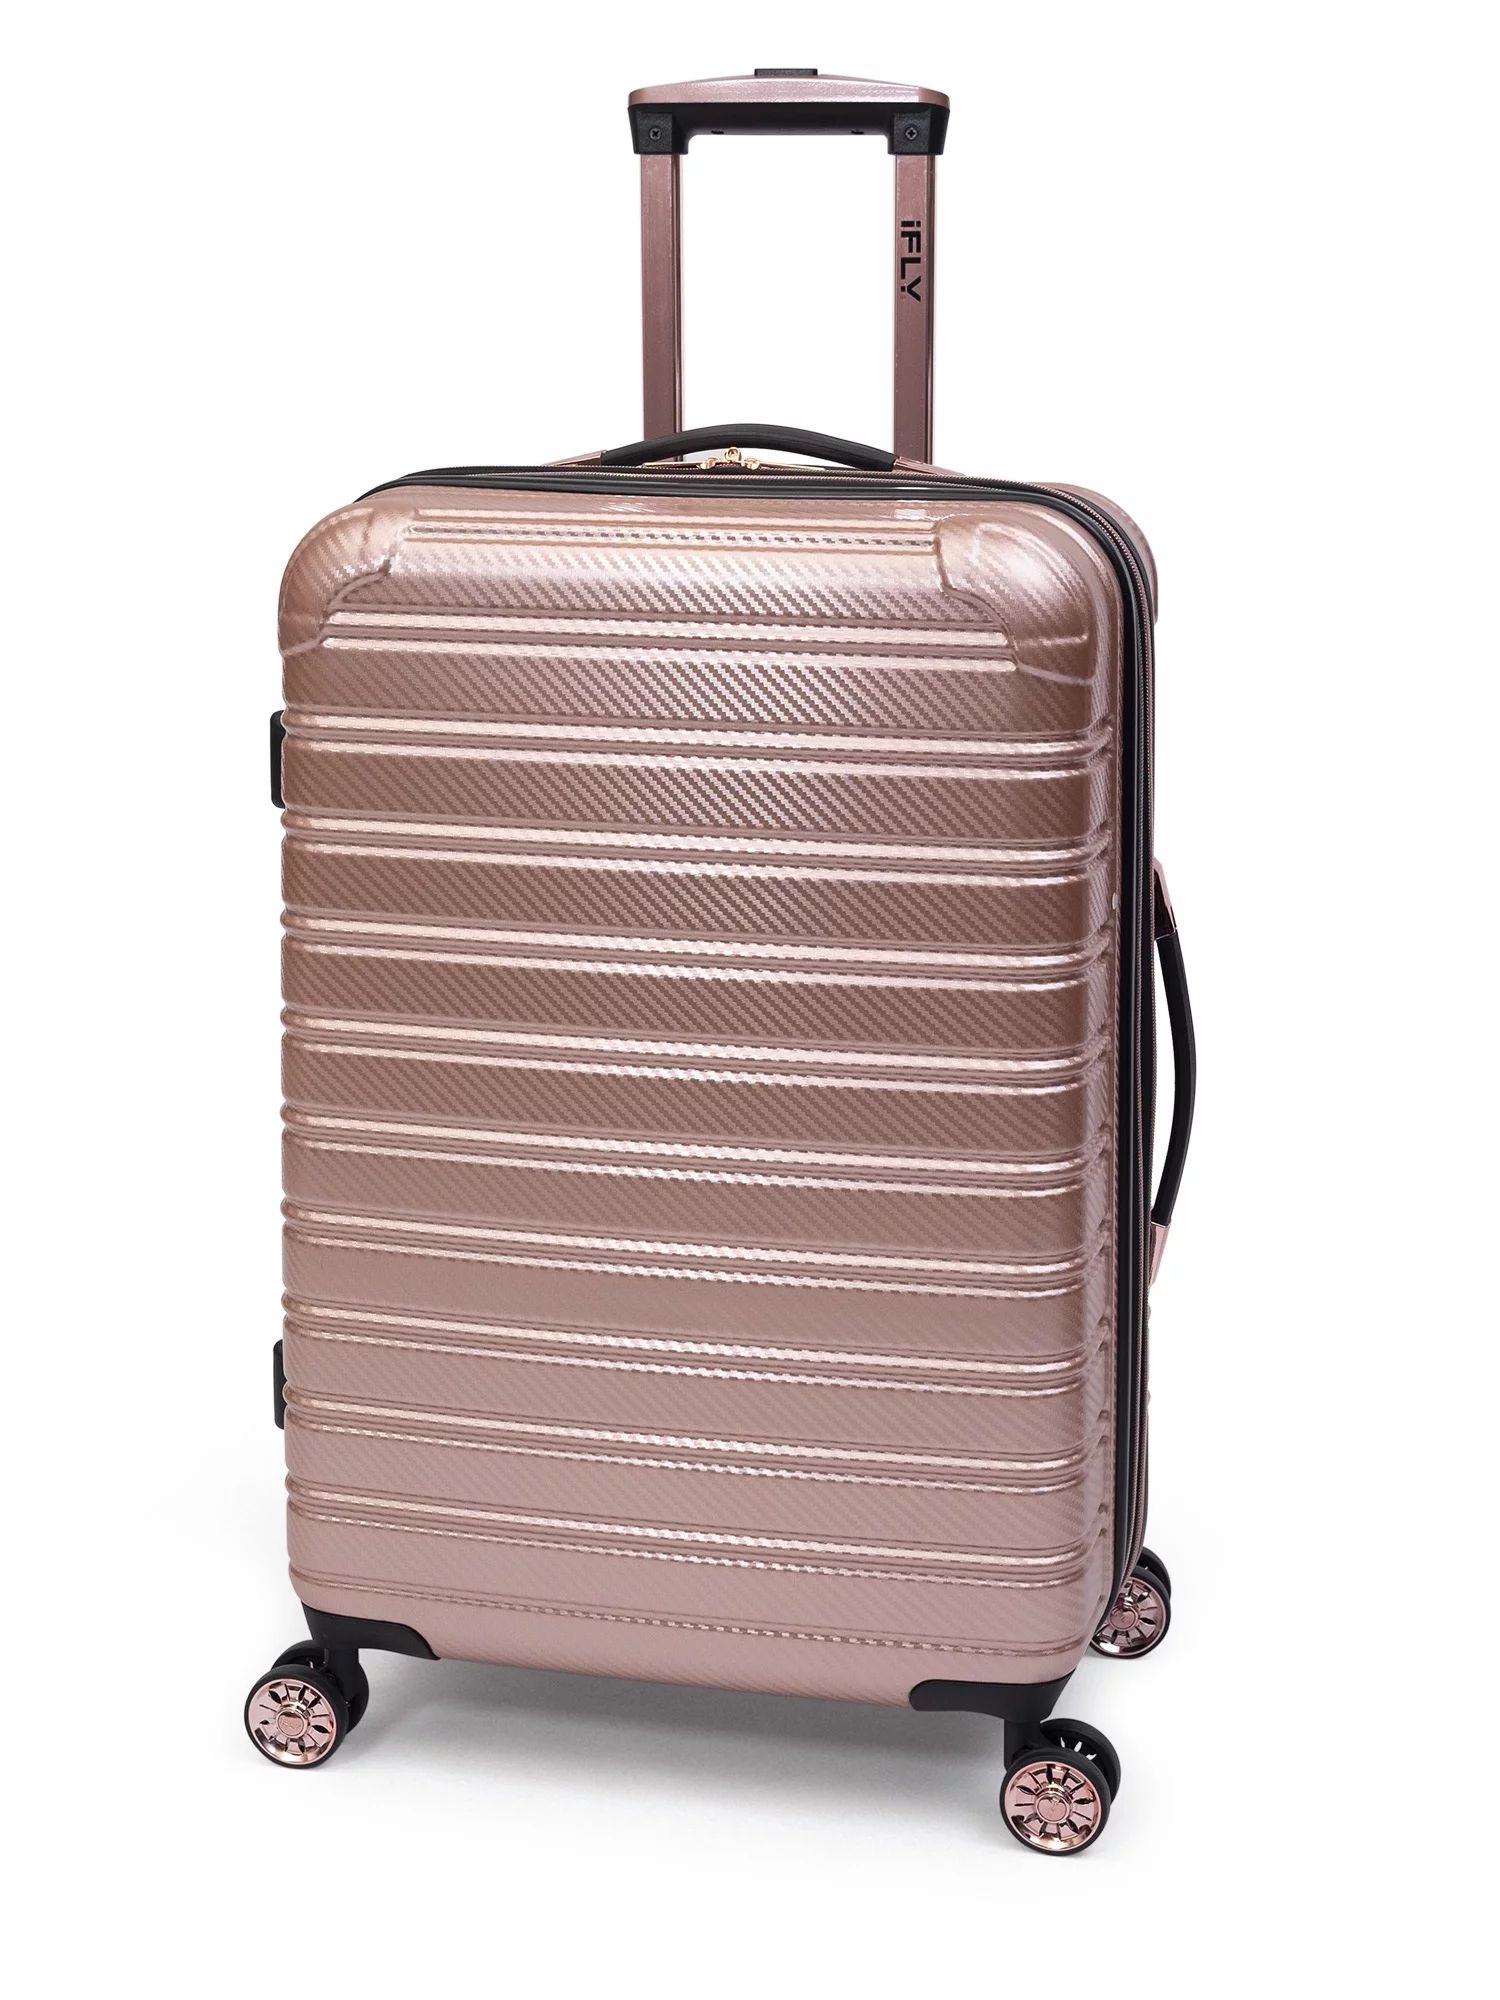 iFLY Hardside Luggage Fibertech Textured 24" Checked Luggage, Rose Gold Luggage | Walmart (US)